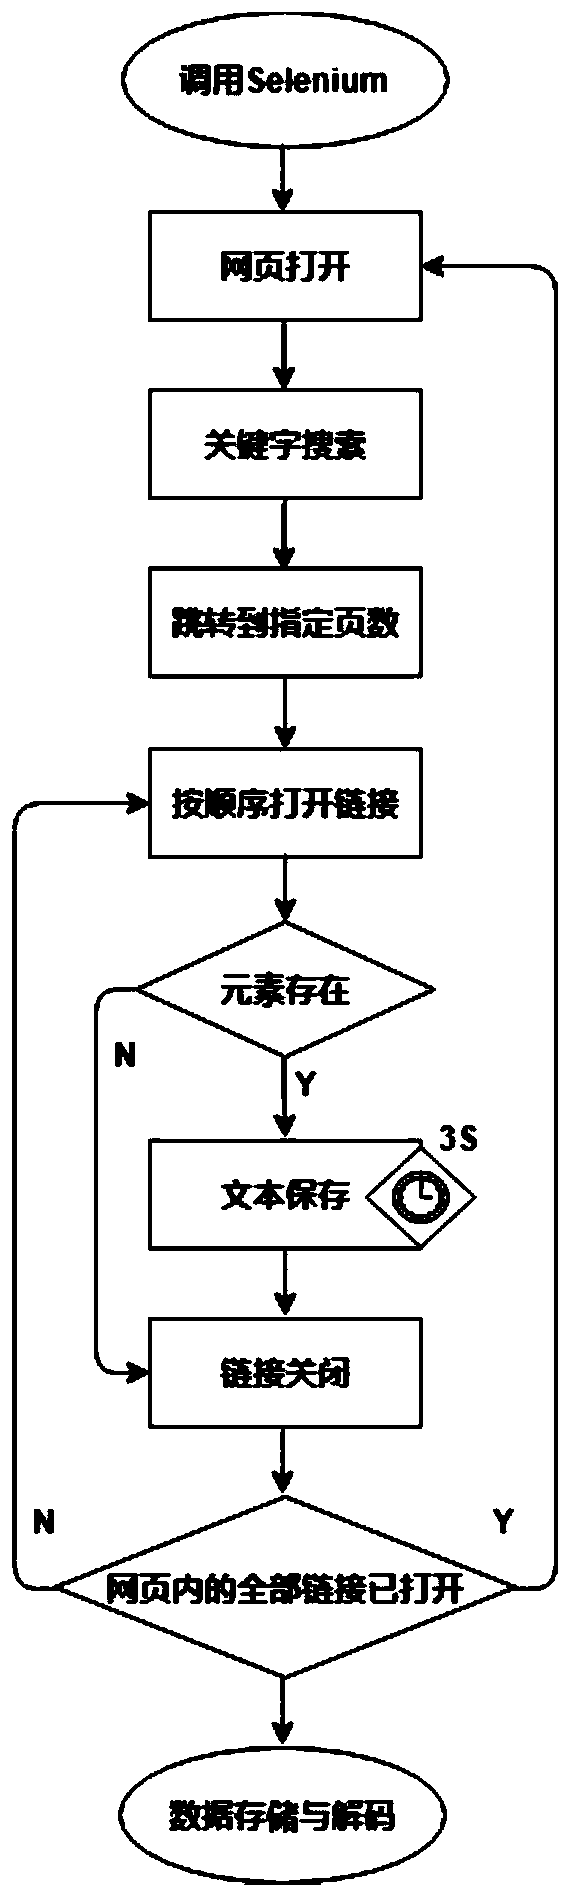 Chinese literature data automatic acquisition method based on web crawler technology